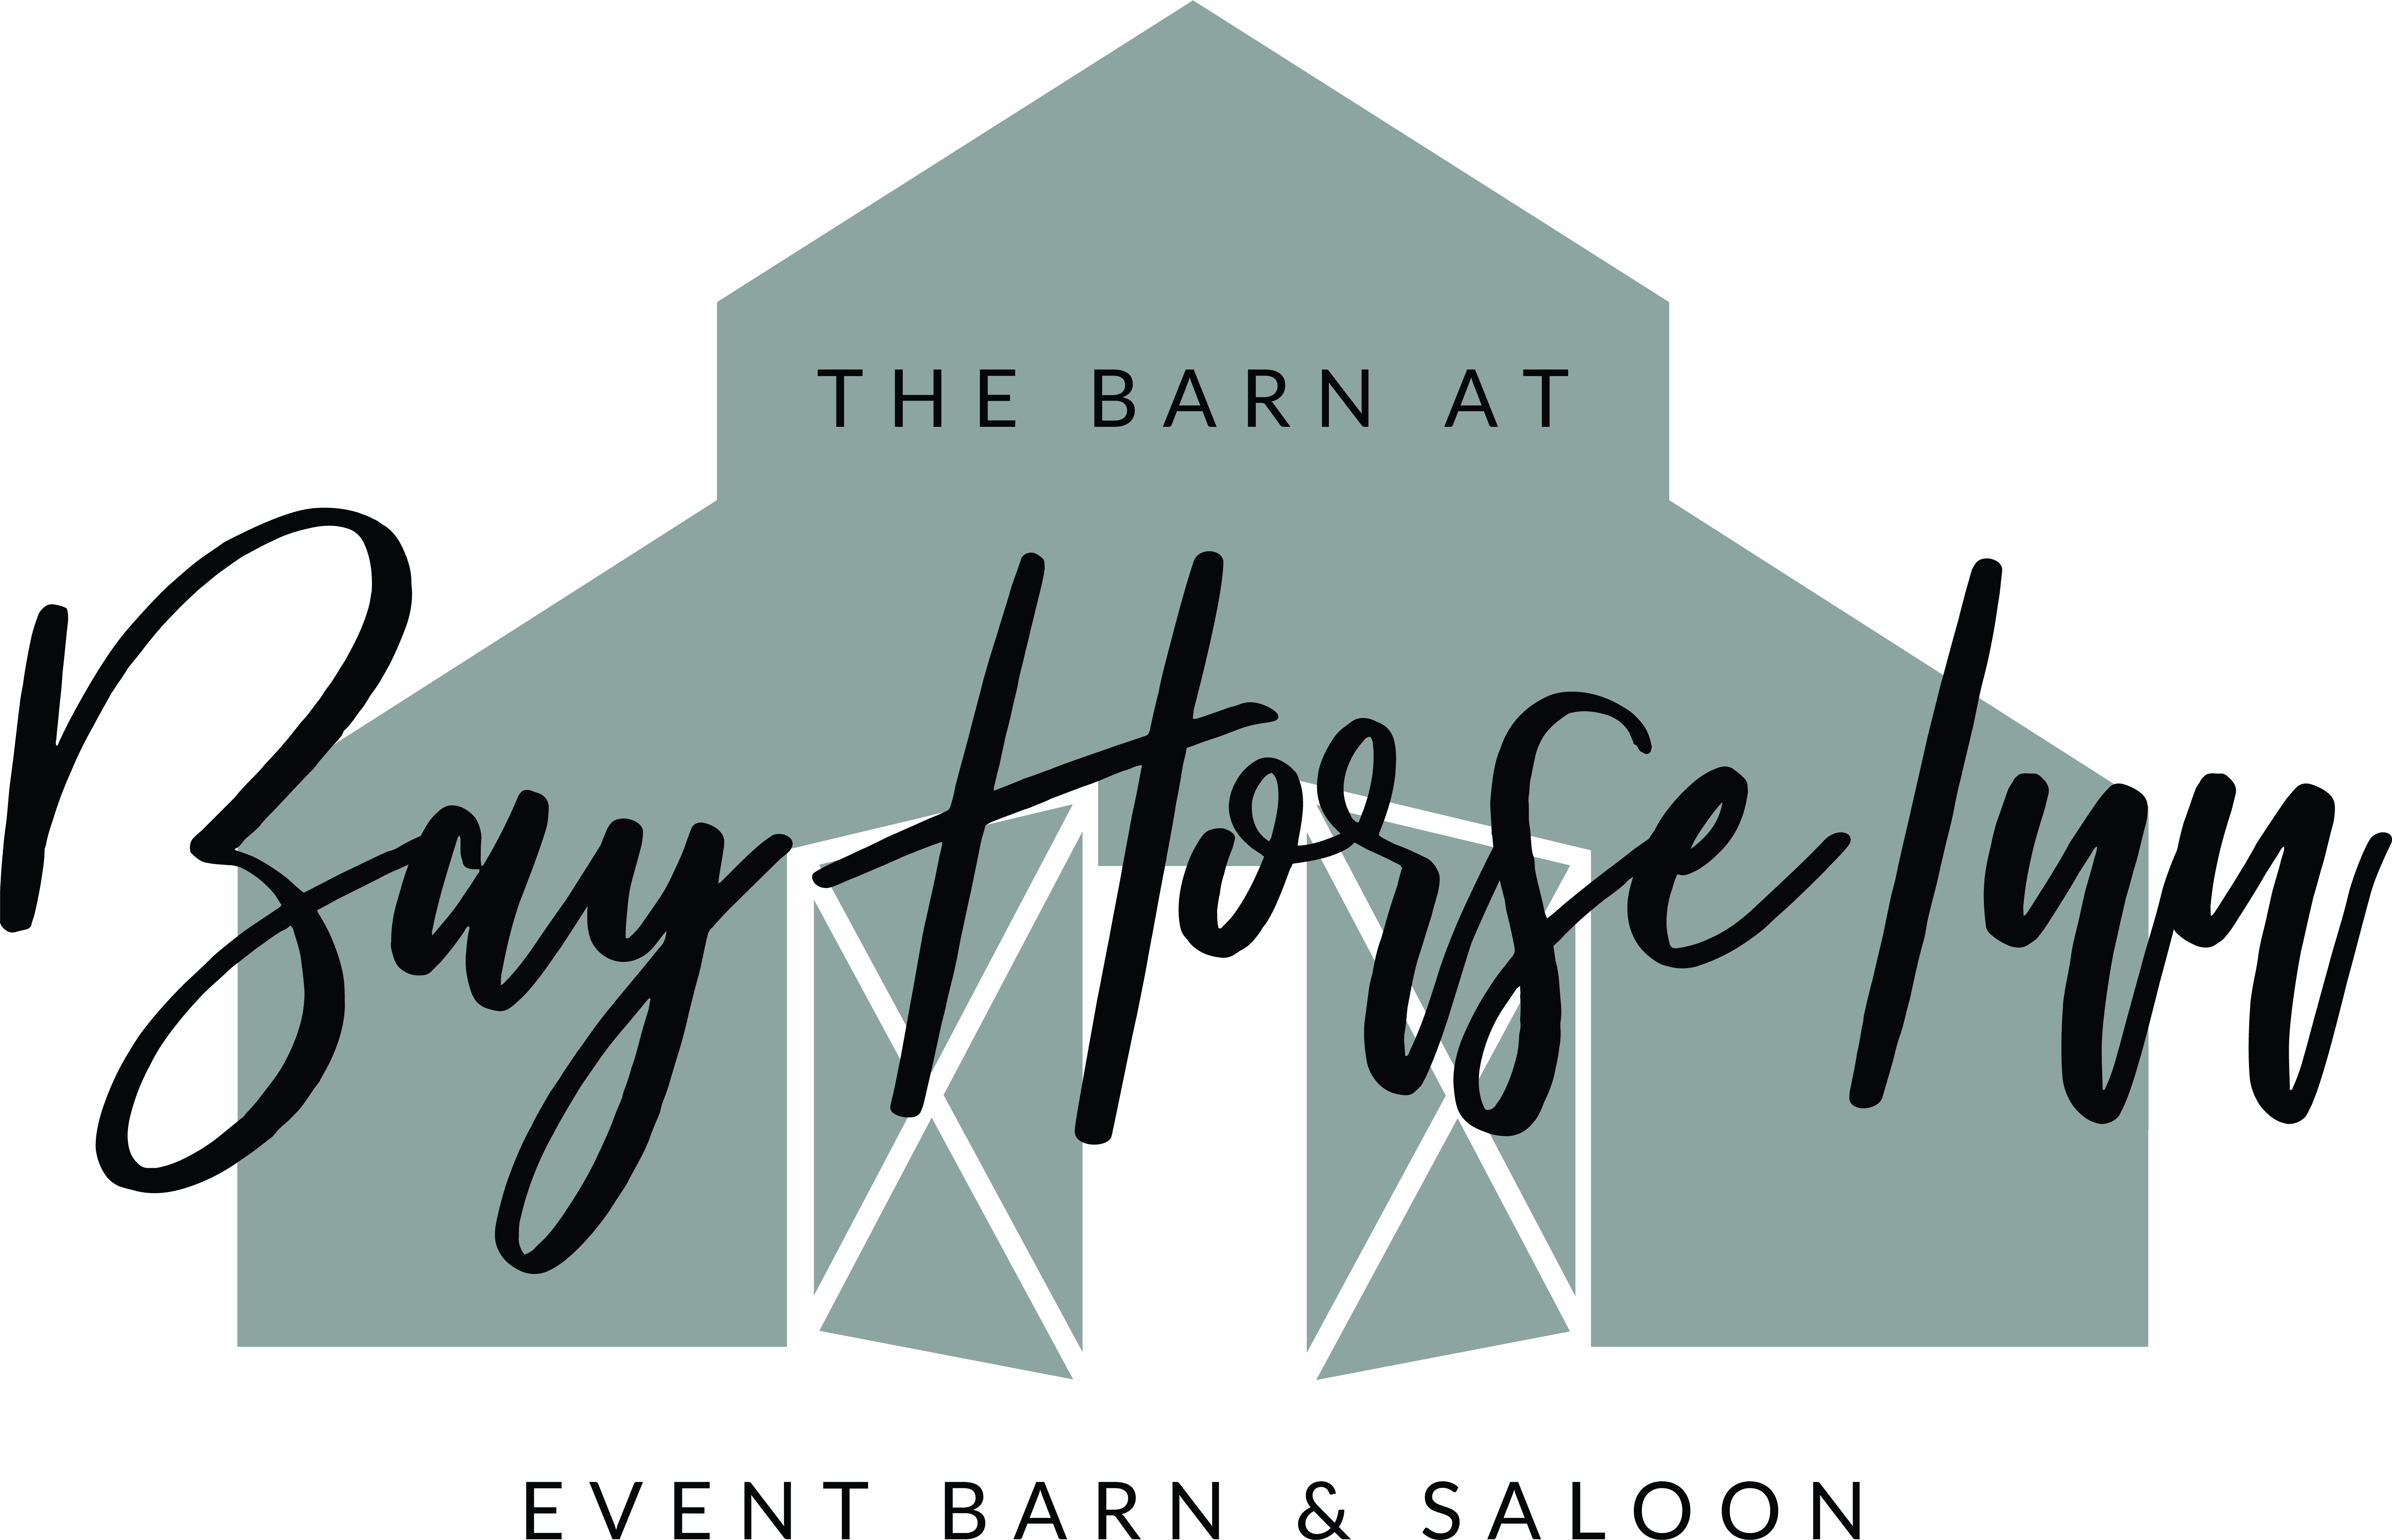 Barn at Bay Horse Inn